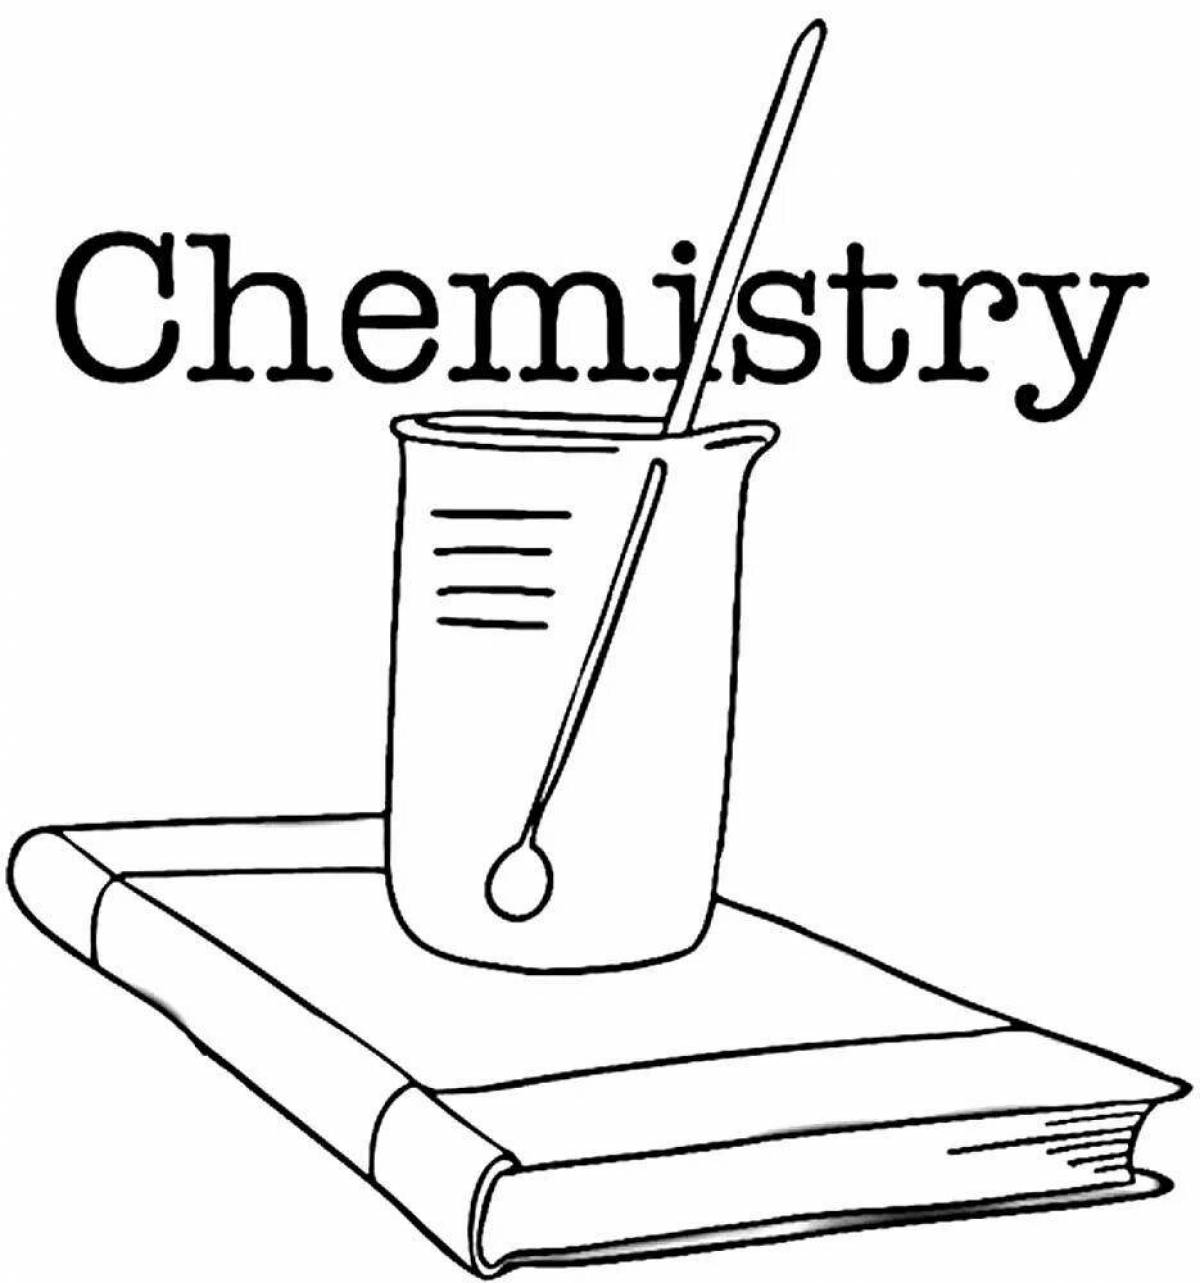 Chemistry fun coloring book for schoolchildren